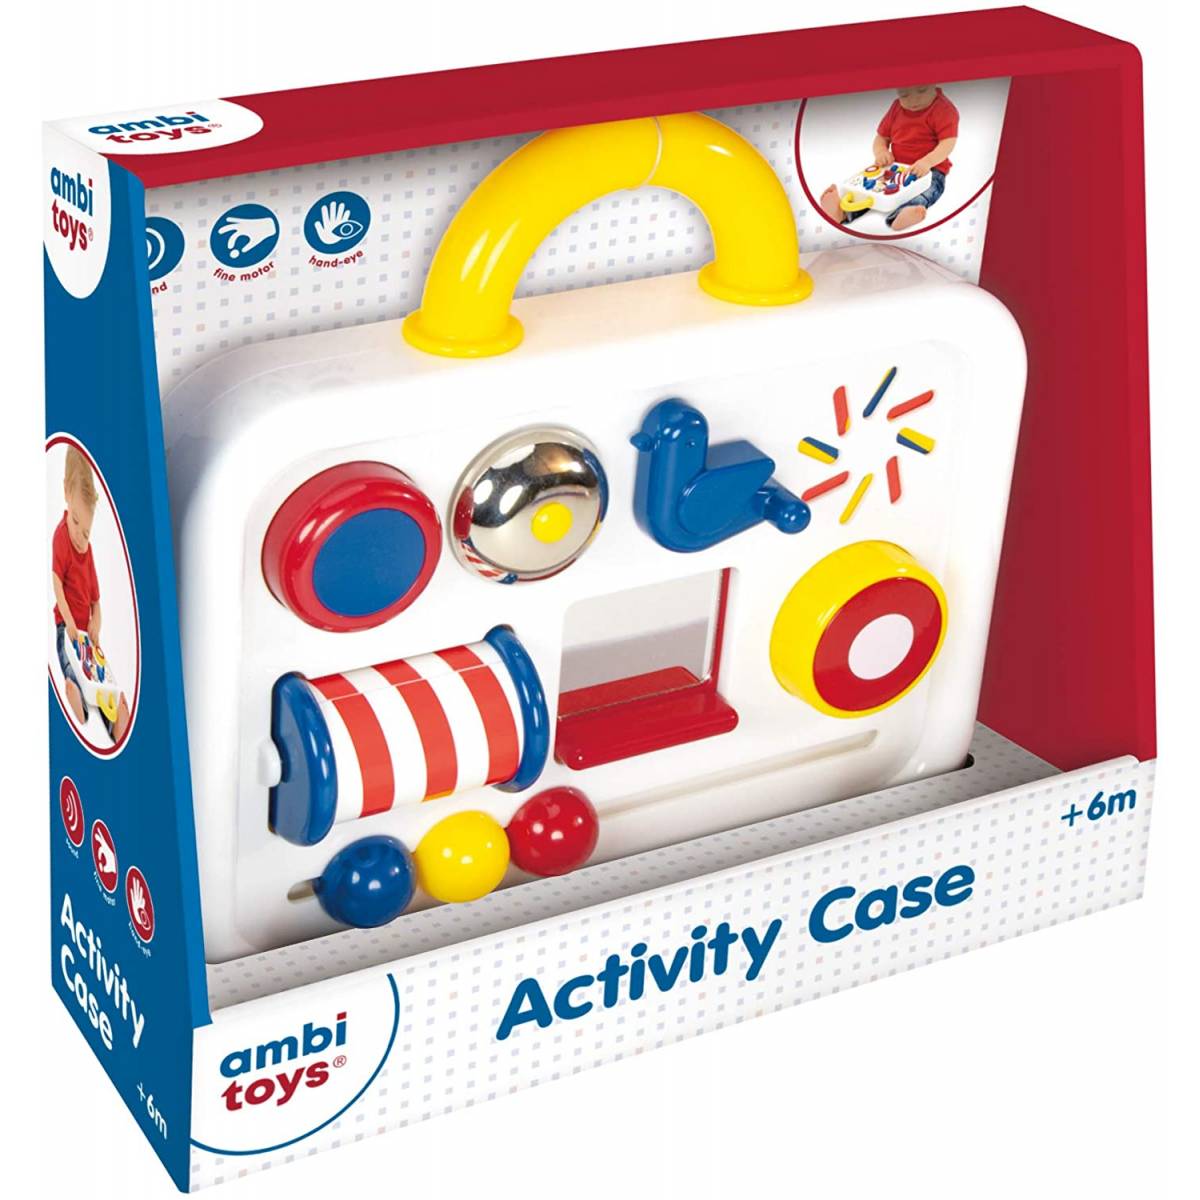 Activity Case